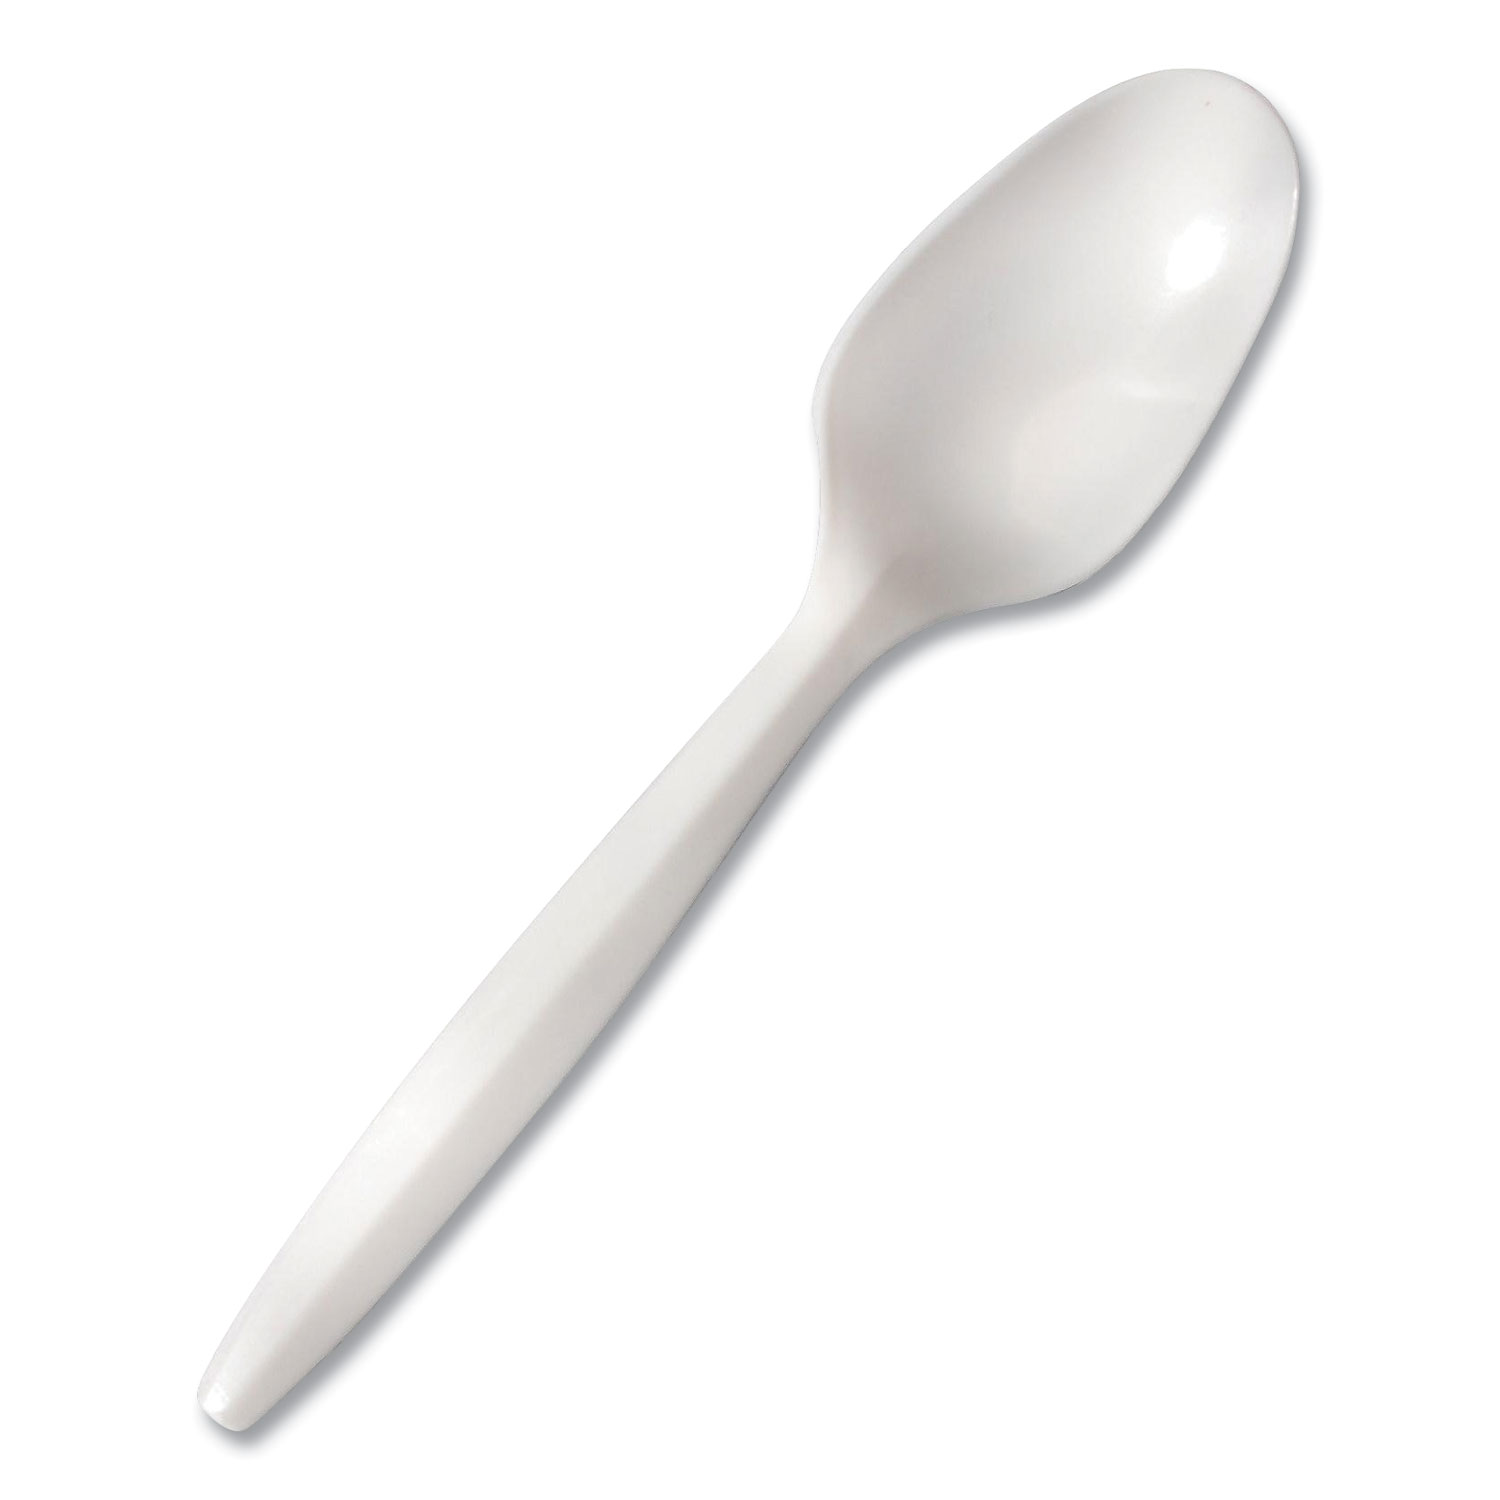 Berkley Square Mediumweight Polypropylene Cutlery, Spoon, White, 1,000/Carton